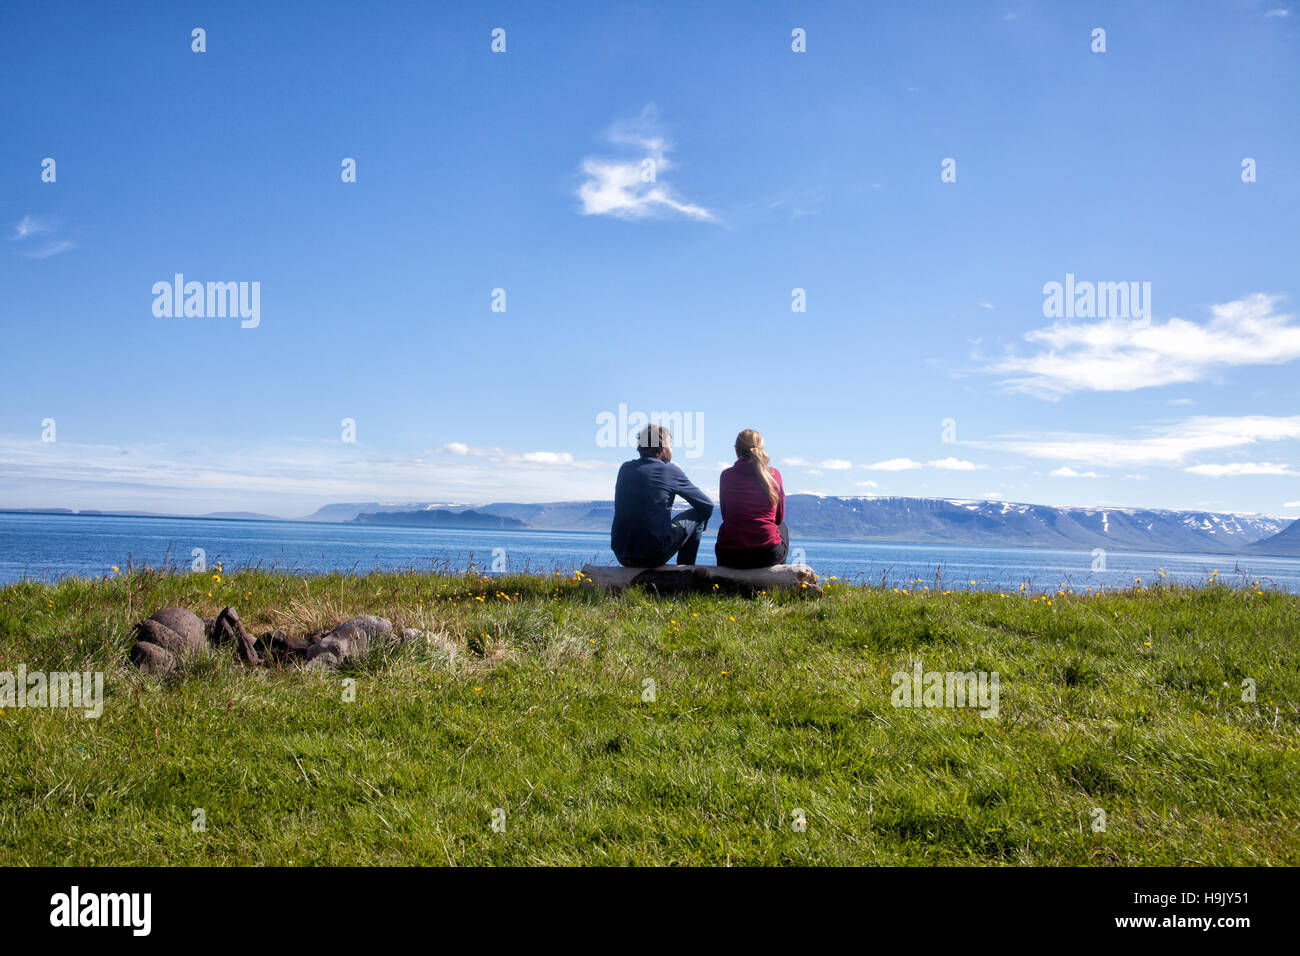 Island, Rückansicht des Paares betrachten Stockfoto